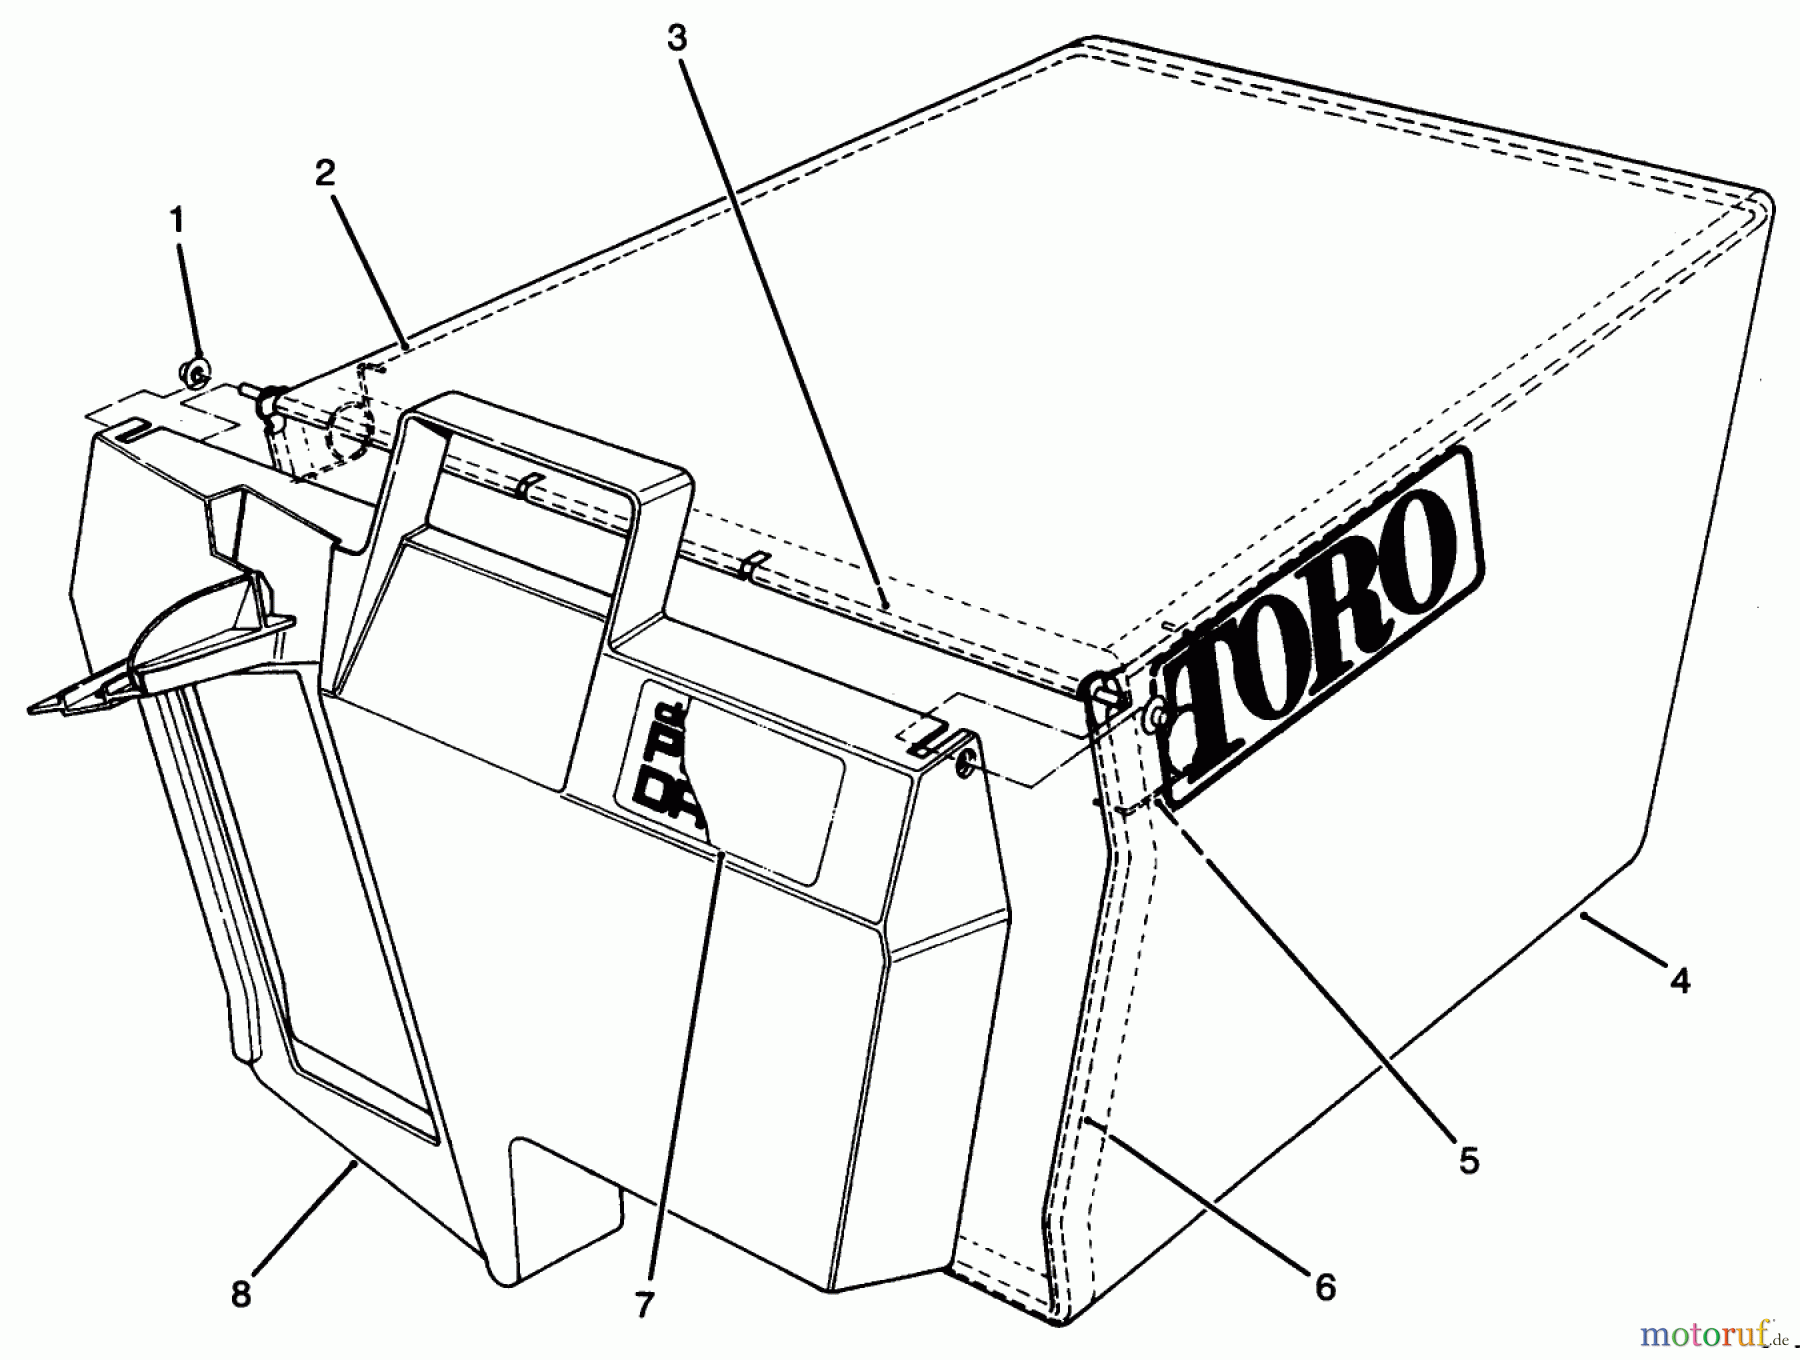  Toro Neu Accessories, Mower 59195 - Toro Rear Bag Kit, 21